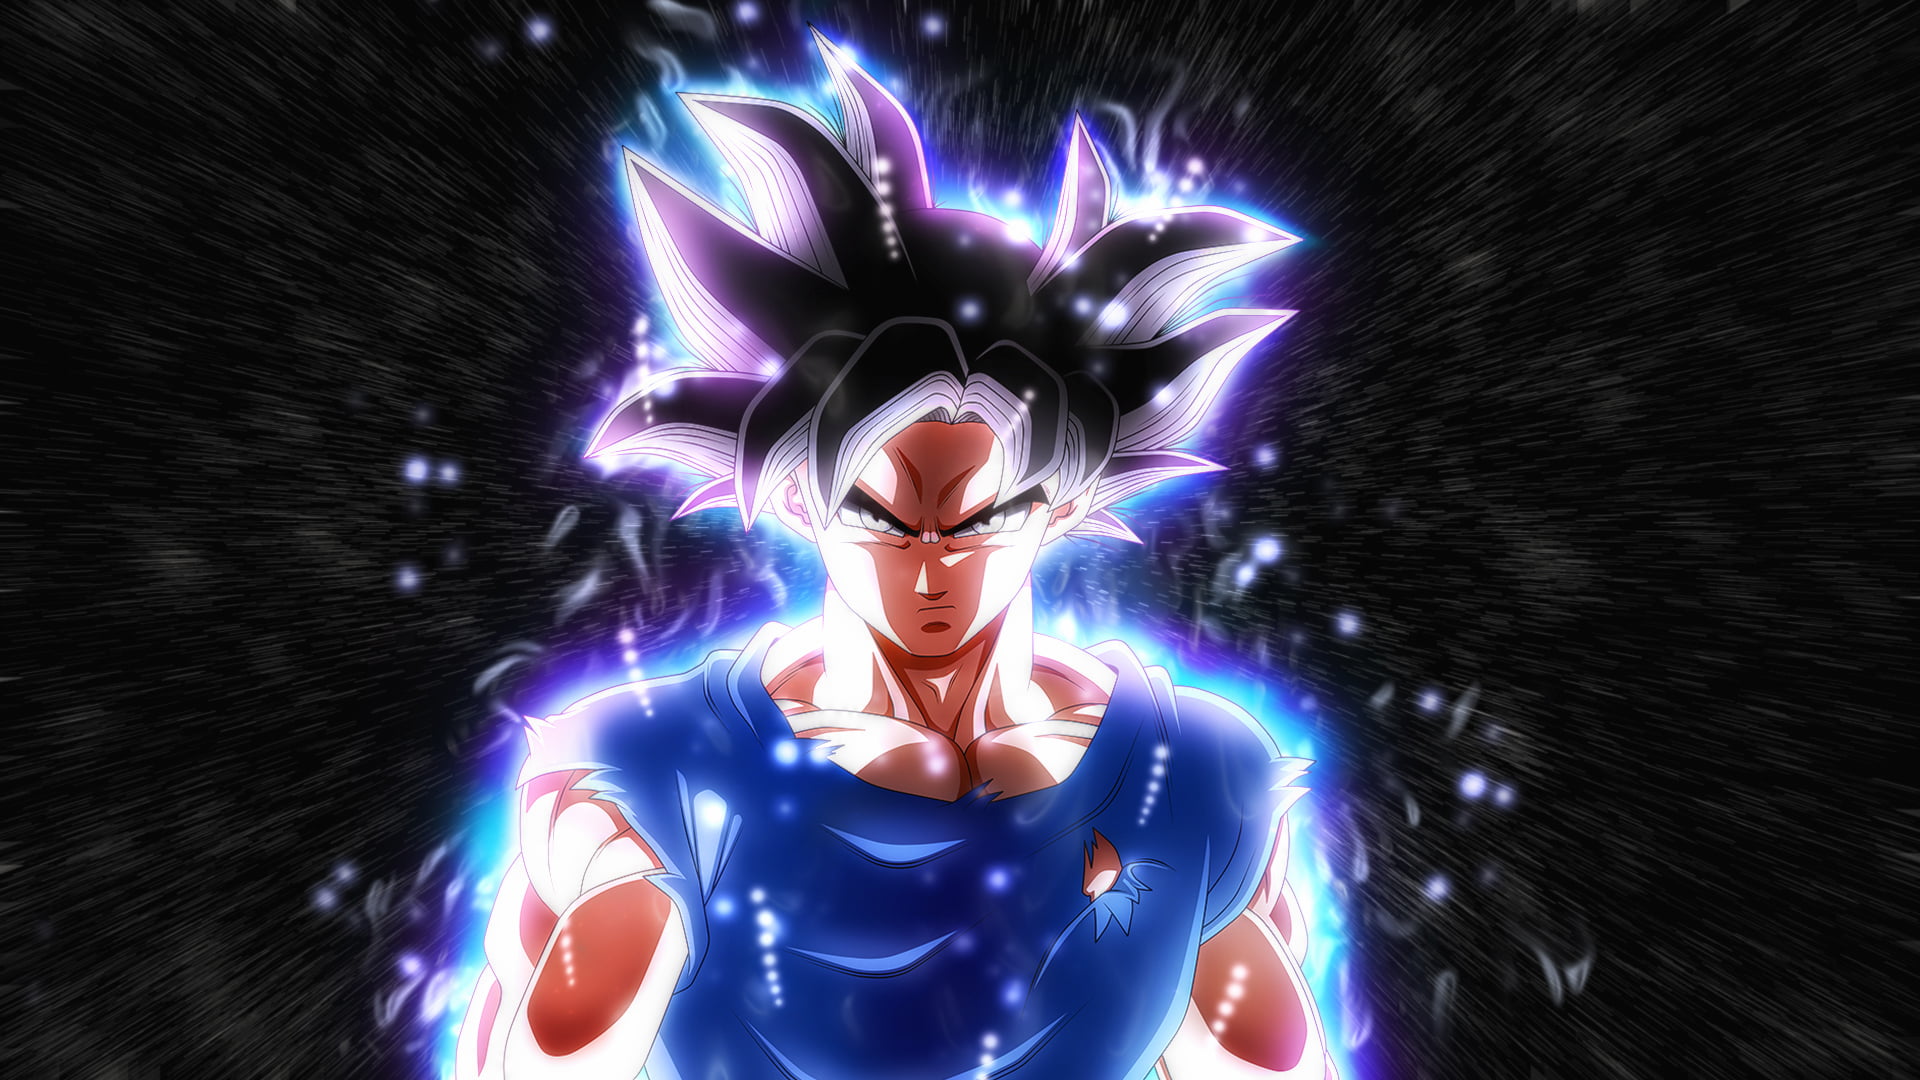 Son Goku wallpaper, Dragon Ball Super, Ultra-Instinct Goku, illuminated